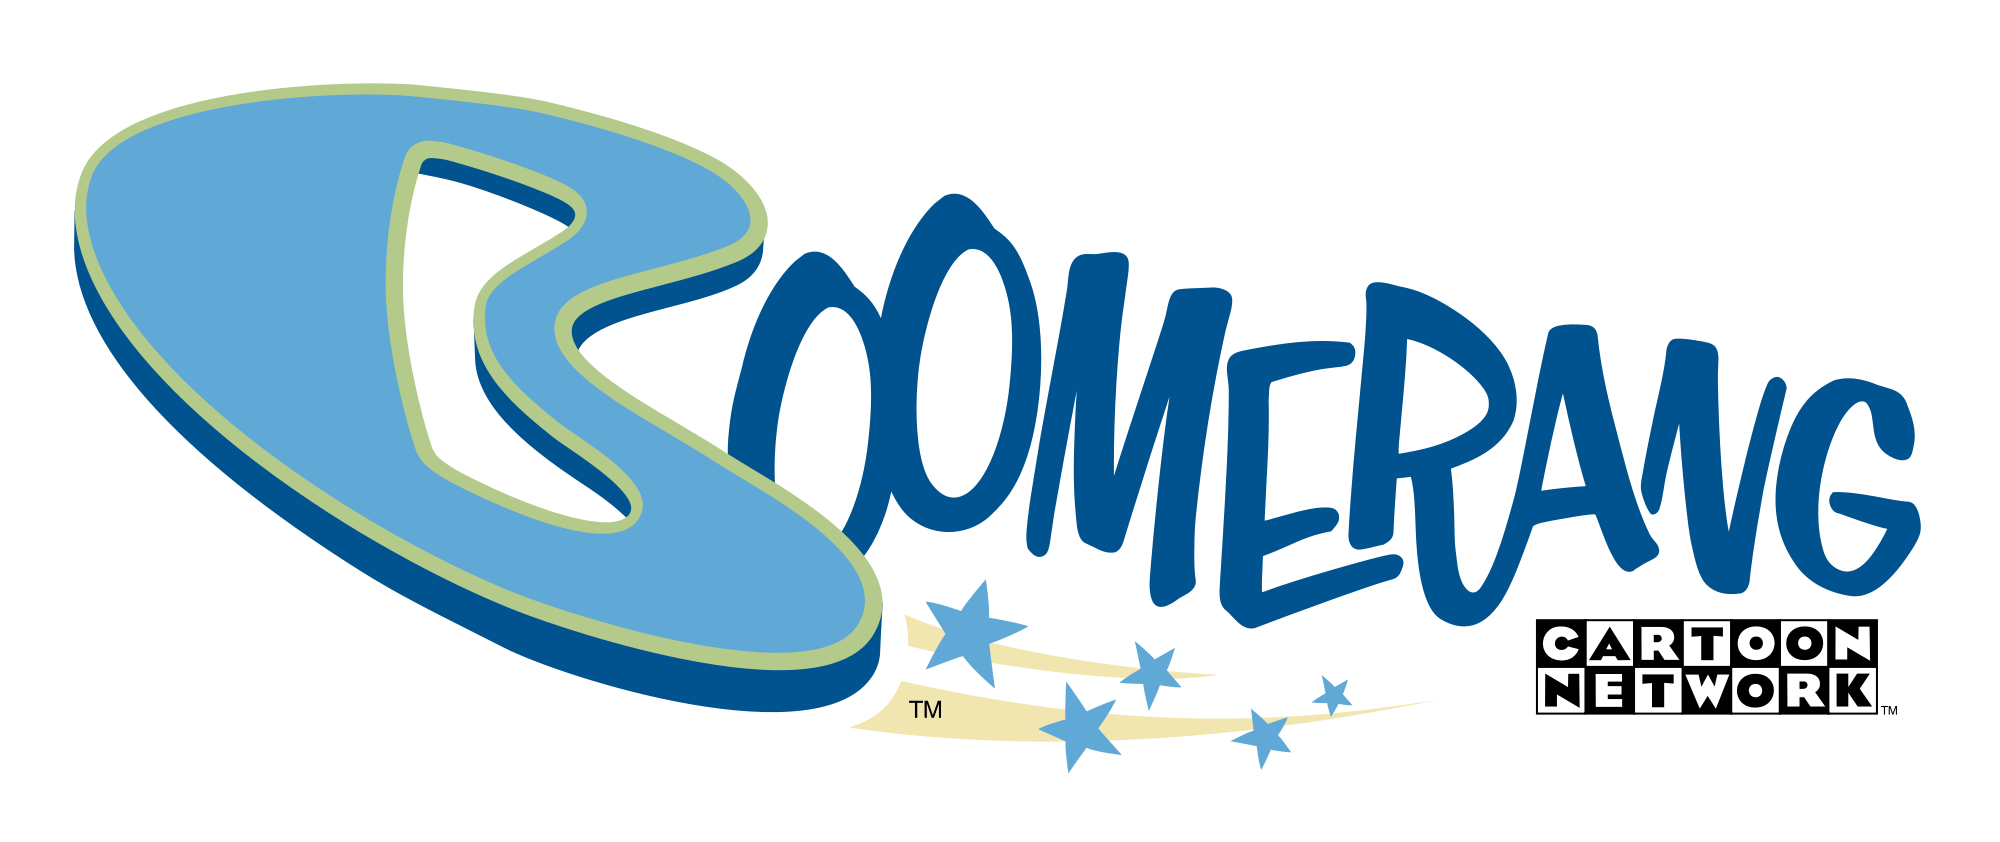 Boomerang Us Logo - Image - Boomerang US logo.png | Macy's Thanksgiving Day Parade Wiki ...